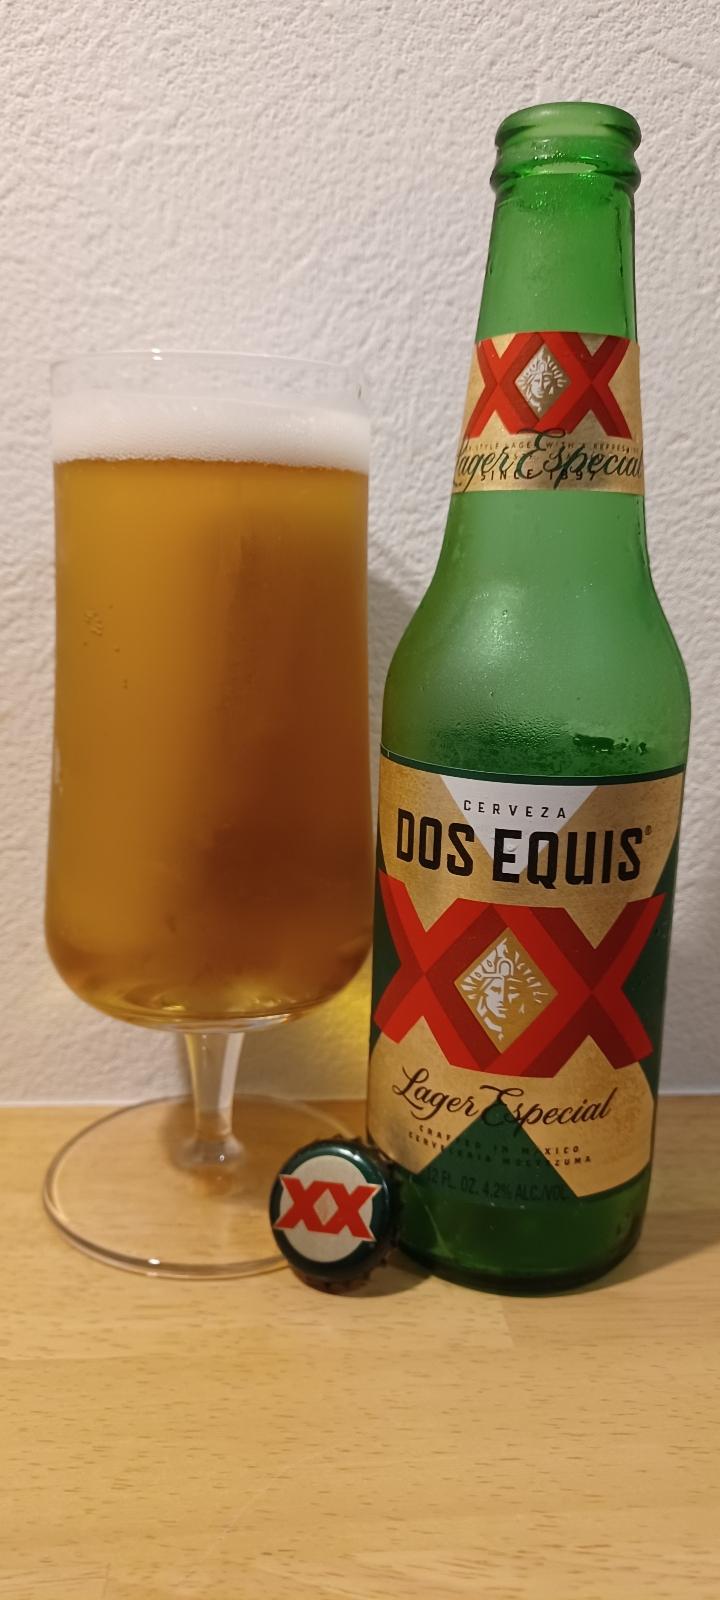 Dos Equis Lager Especial